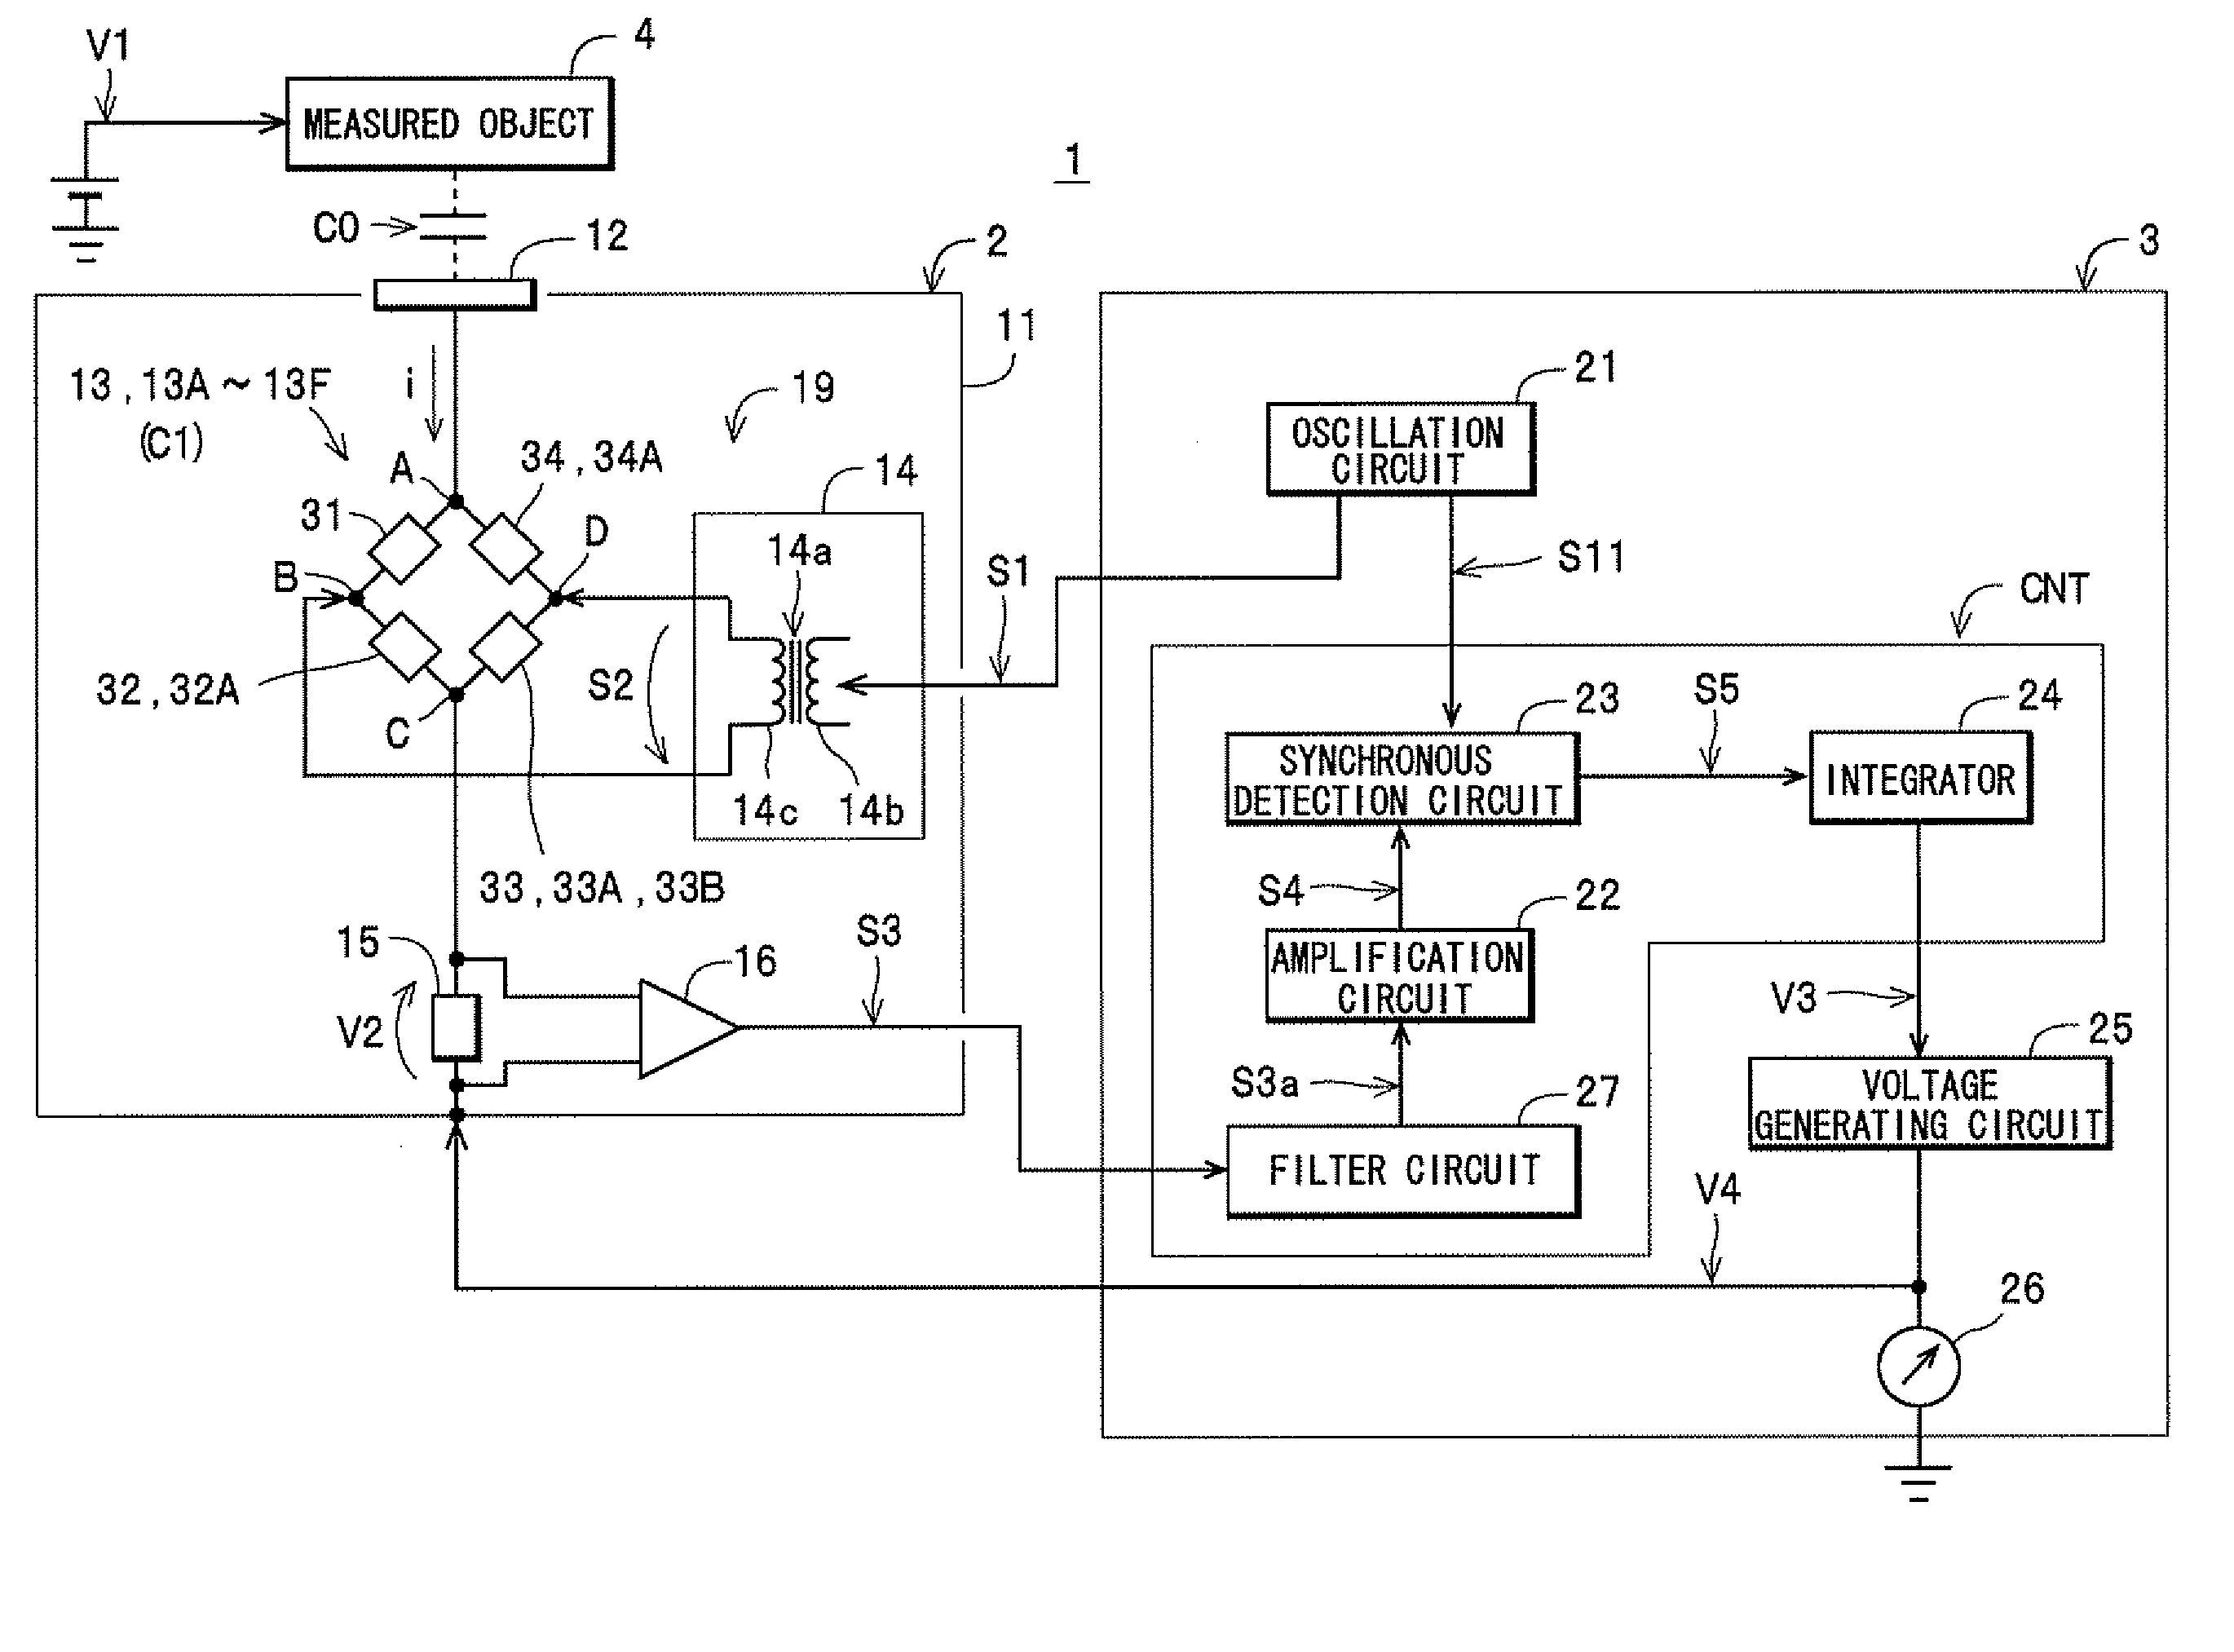 Variable capacitance circuit, voltage measuring apparatus, and power measuring apparatus